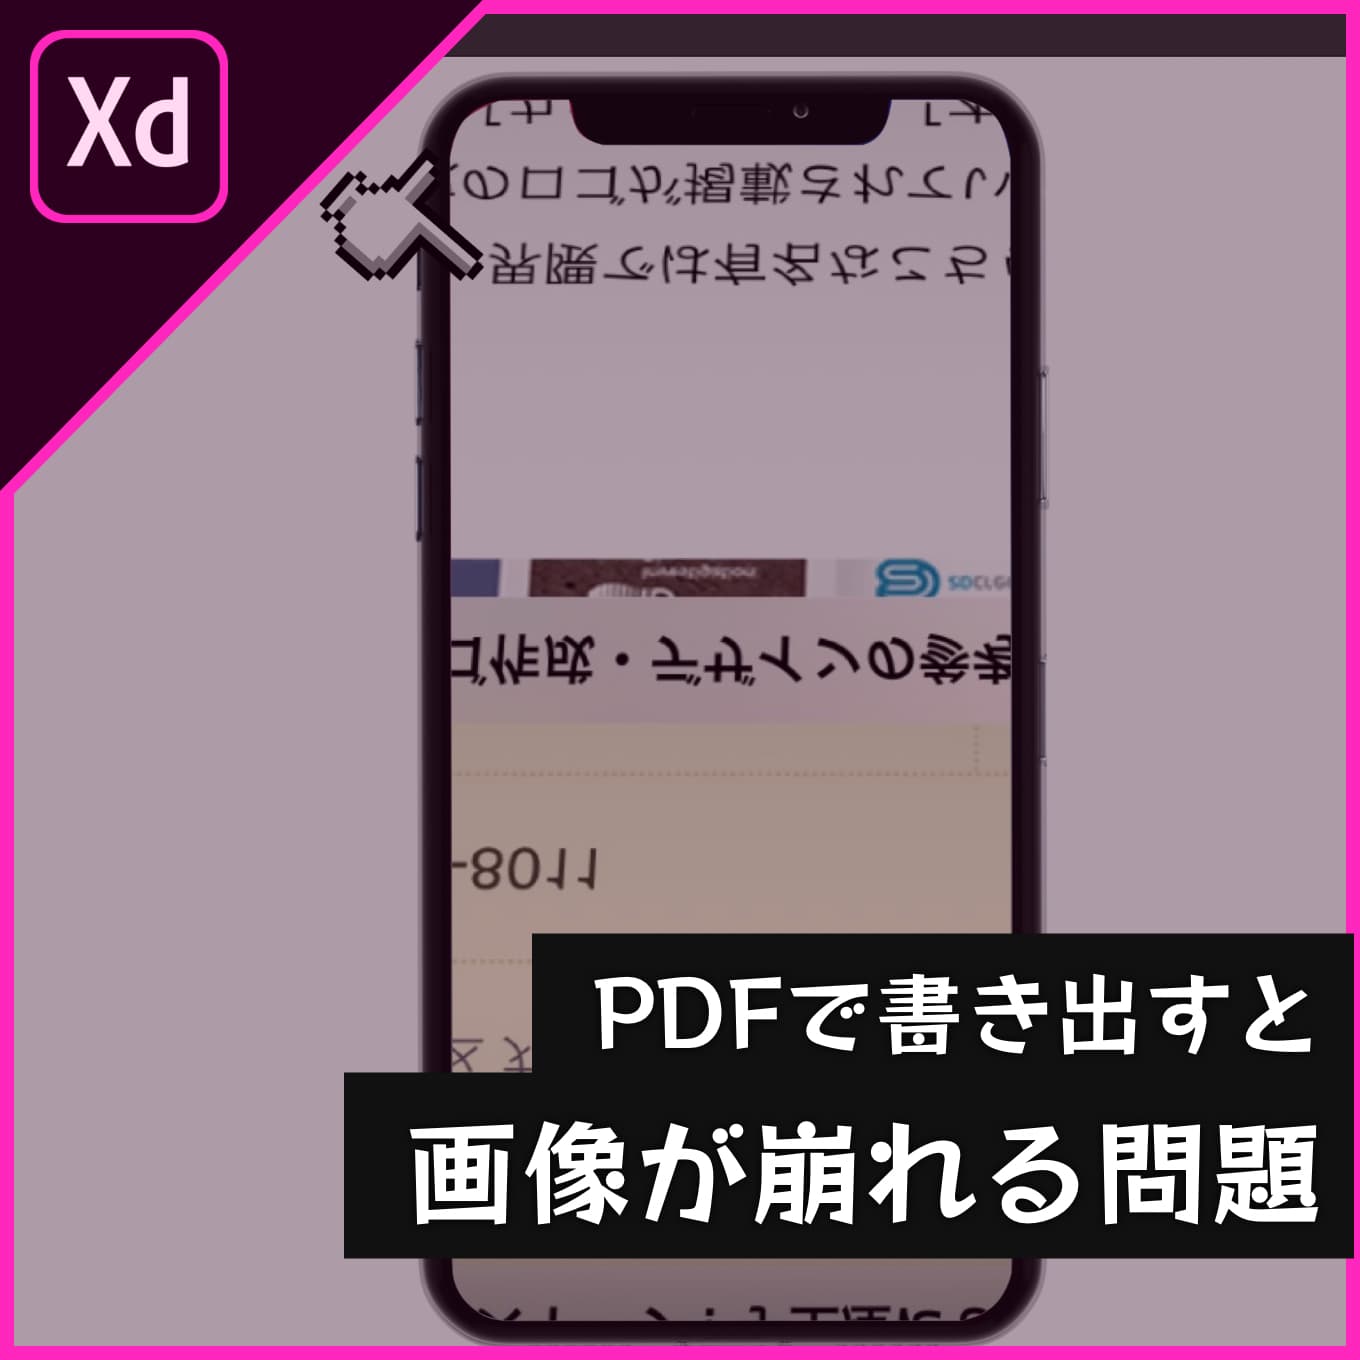 Xdでpdfに書き出すと画像が崩れる不具合への対処法 あなたのスイッチを押すブログ